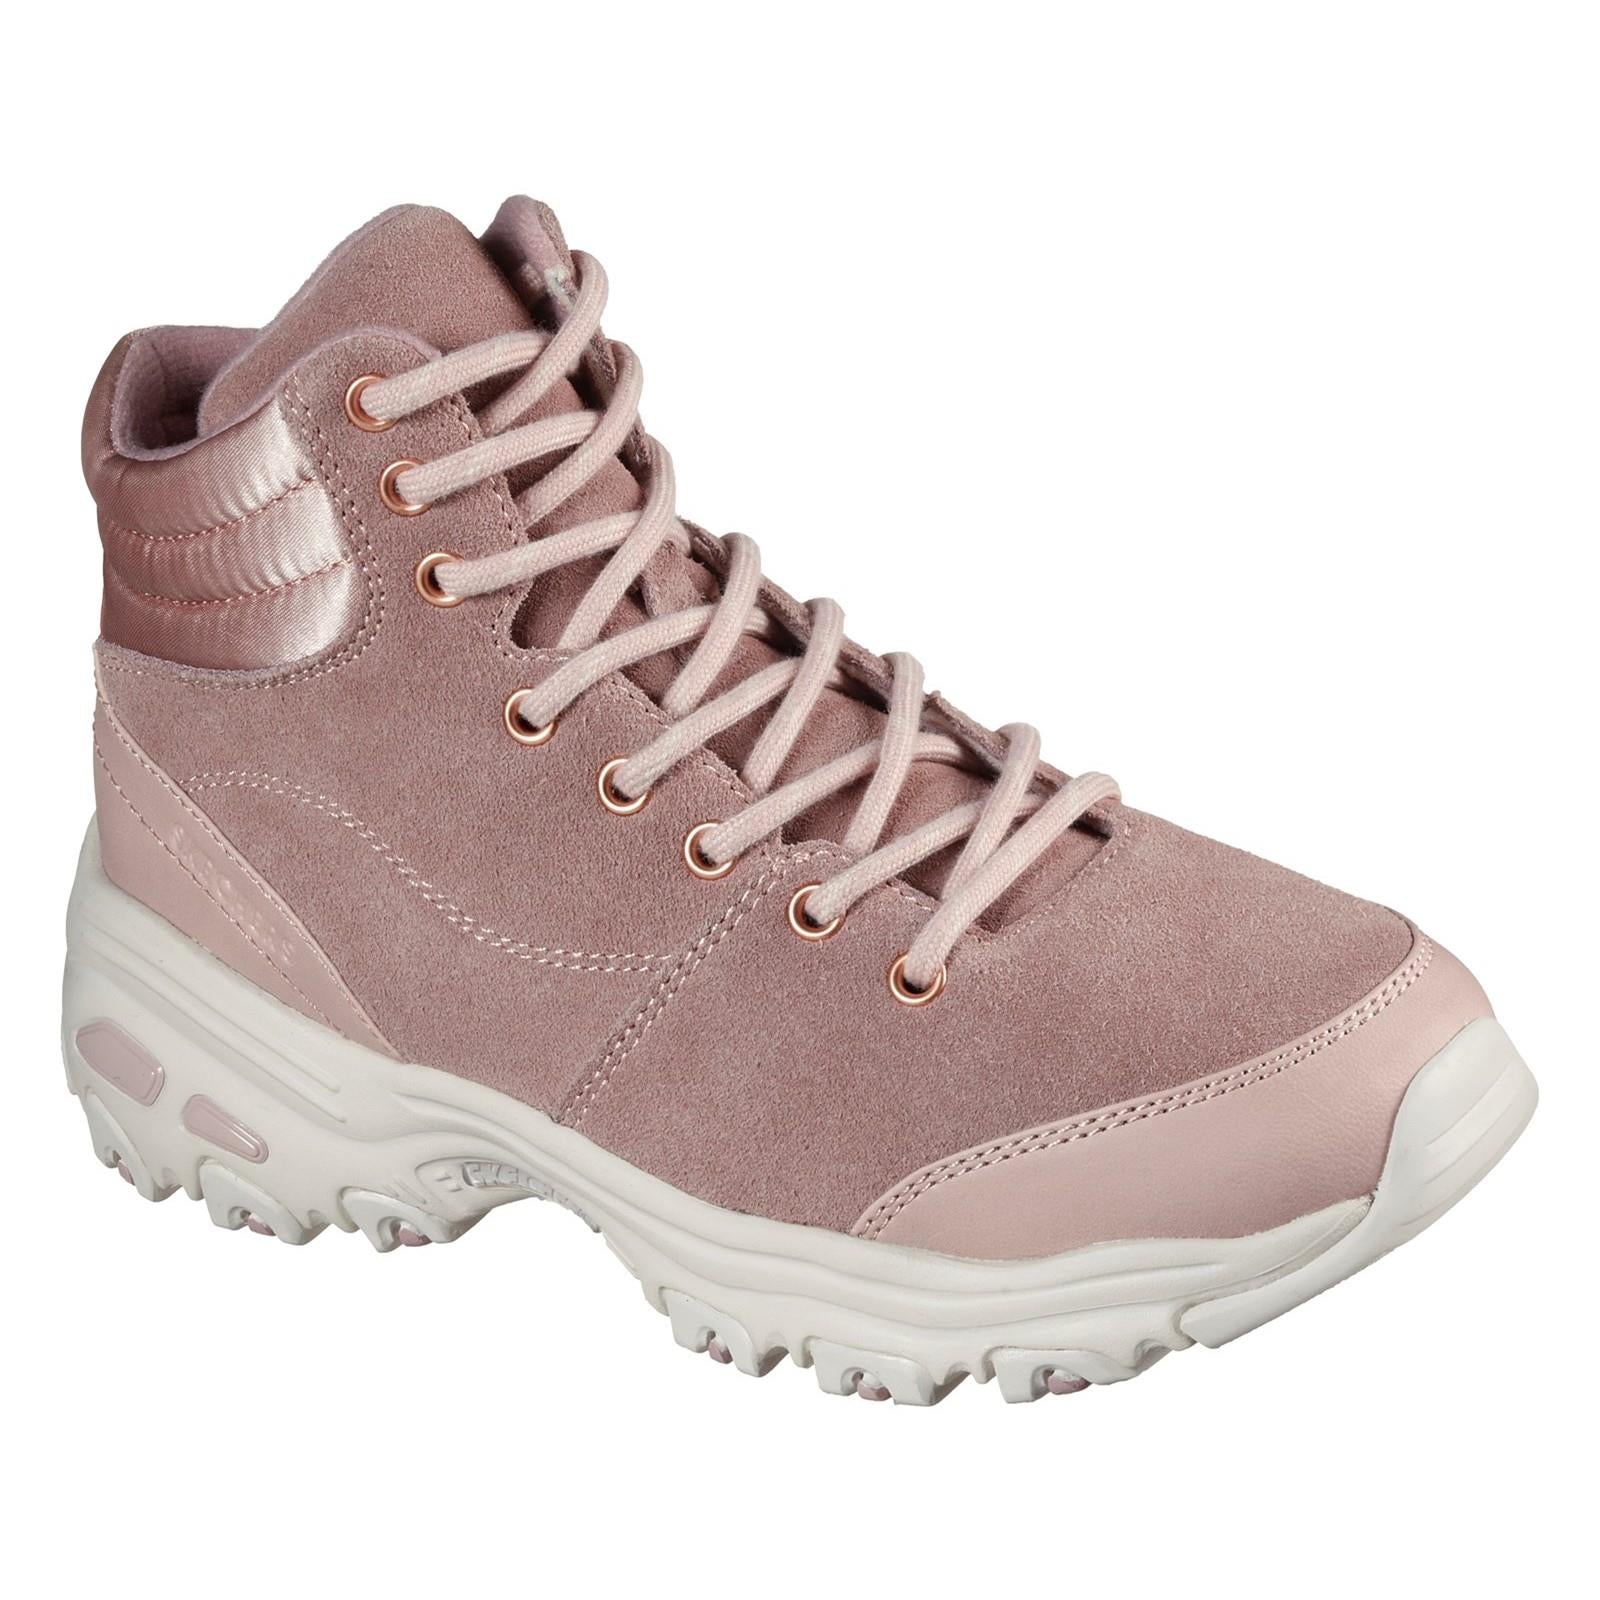 Skechers D'Lites New Chills ladies blush pink warm memory foam ankle boots